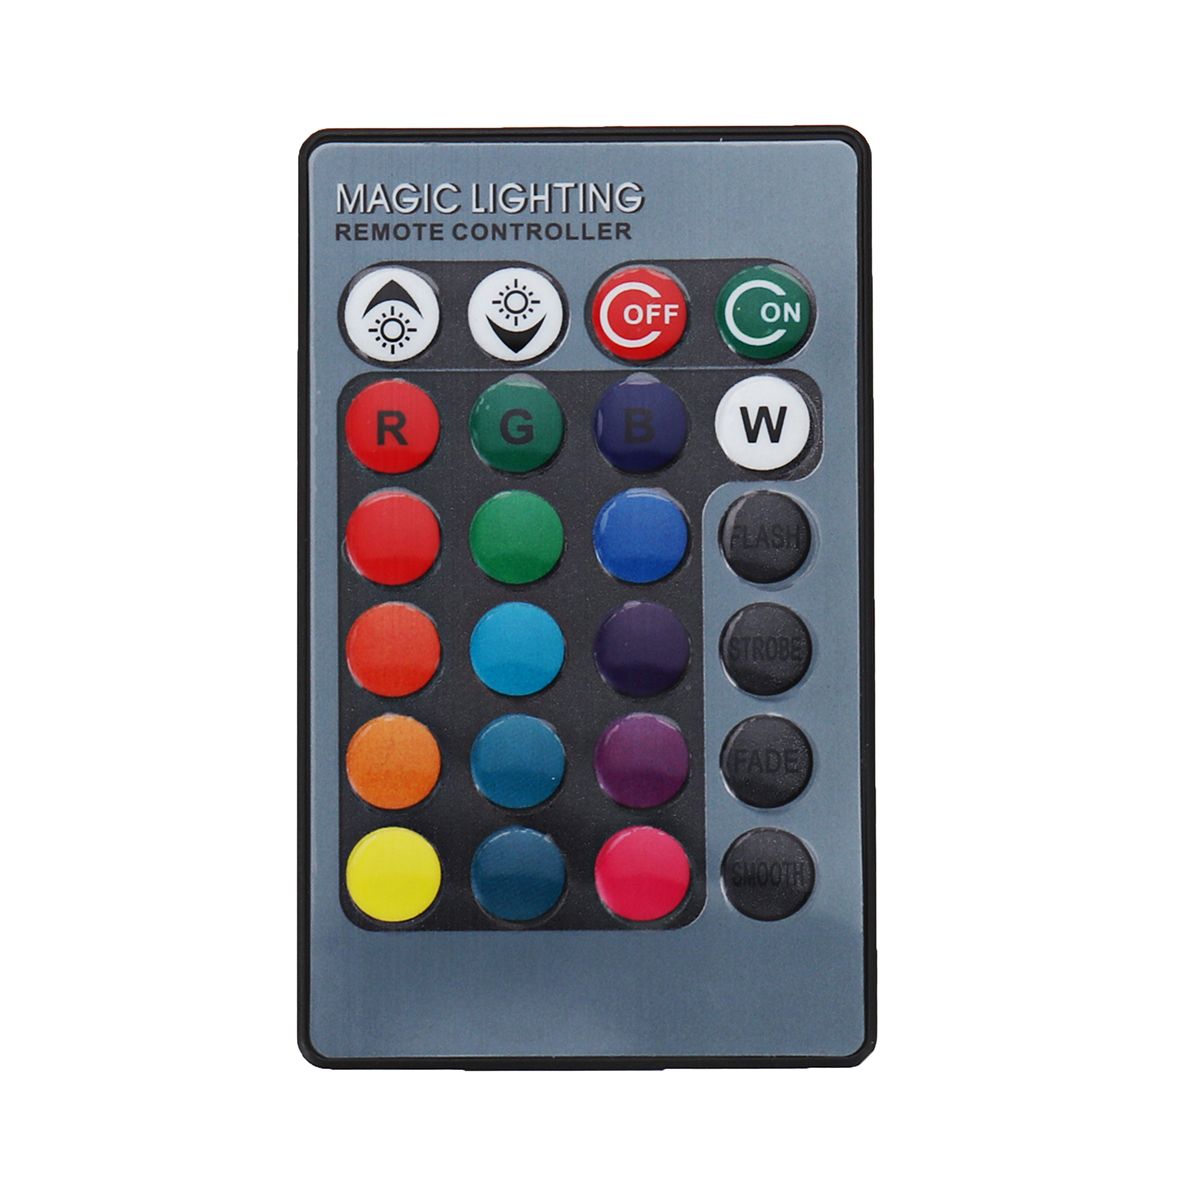 AC85-265-3W-E27-E14-Dimmable-RGB-LED-Light-Bulb24-Key-IR-Remote-Controller-for-Home-Party-Decor-1344412